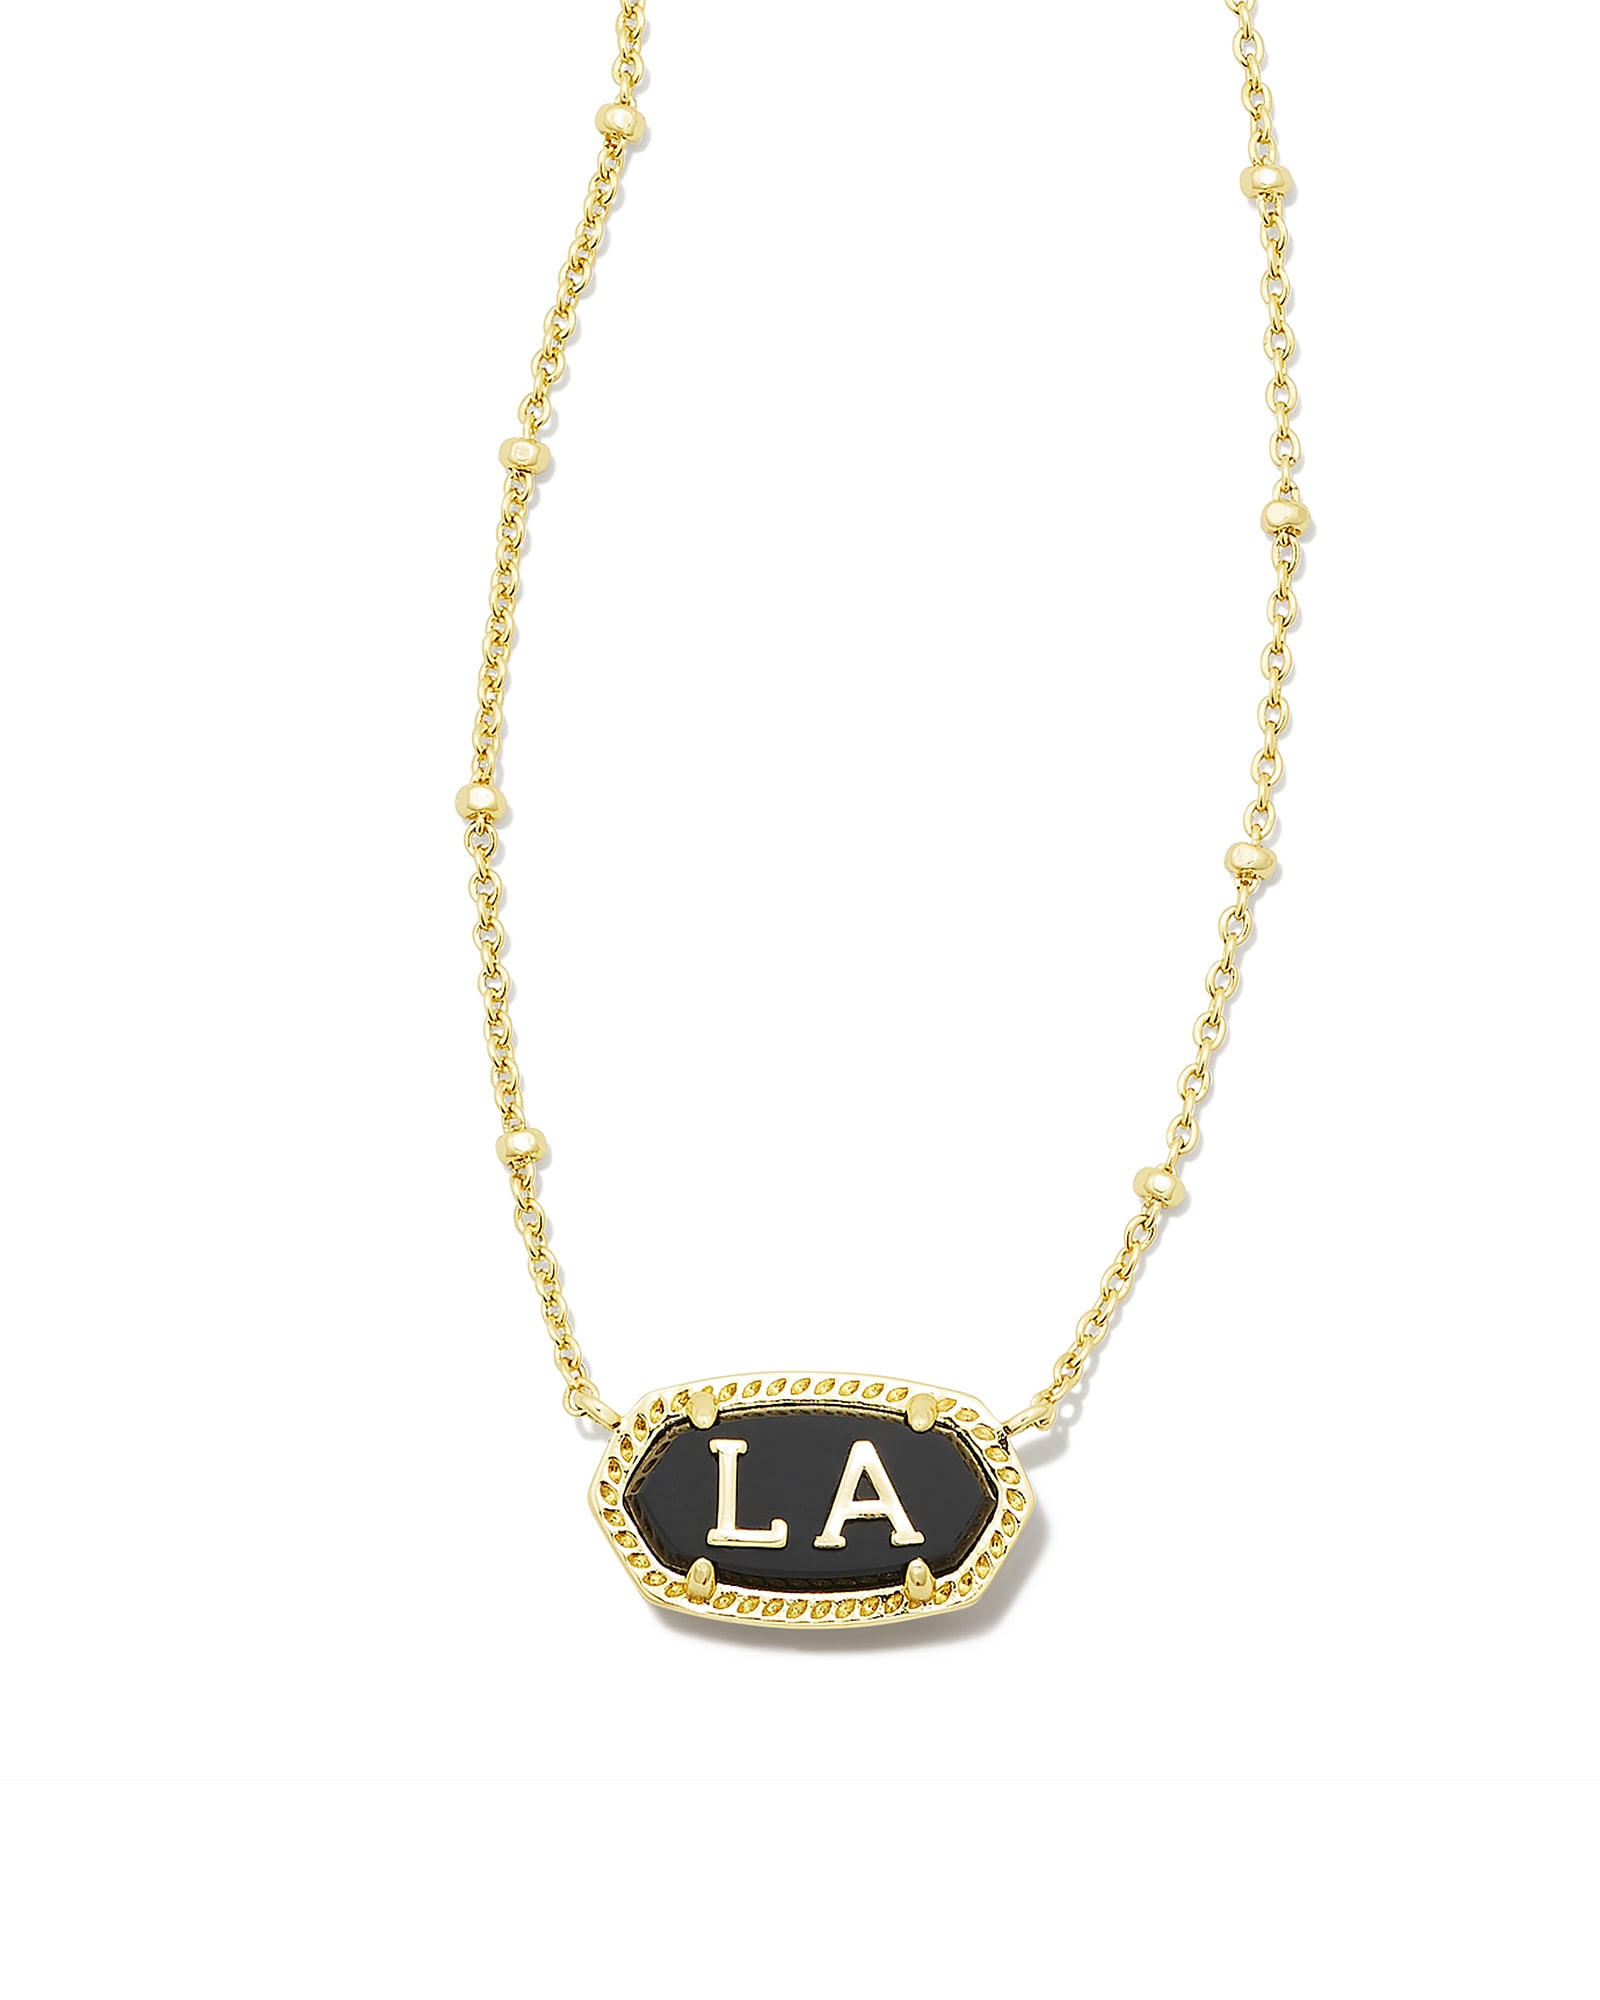 Gold Louisiana necklace, Louisiana pendant, Louisiana charm, Louisiana  jewelry, state jewelry